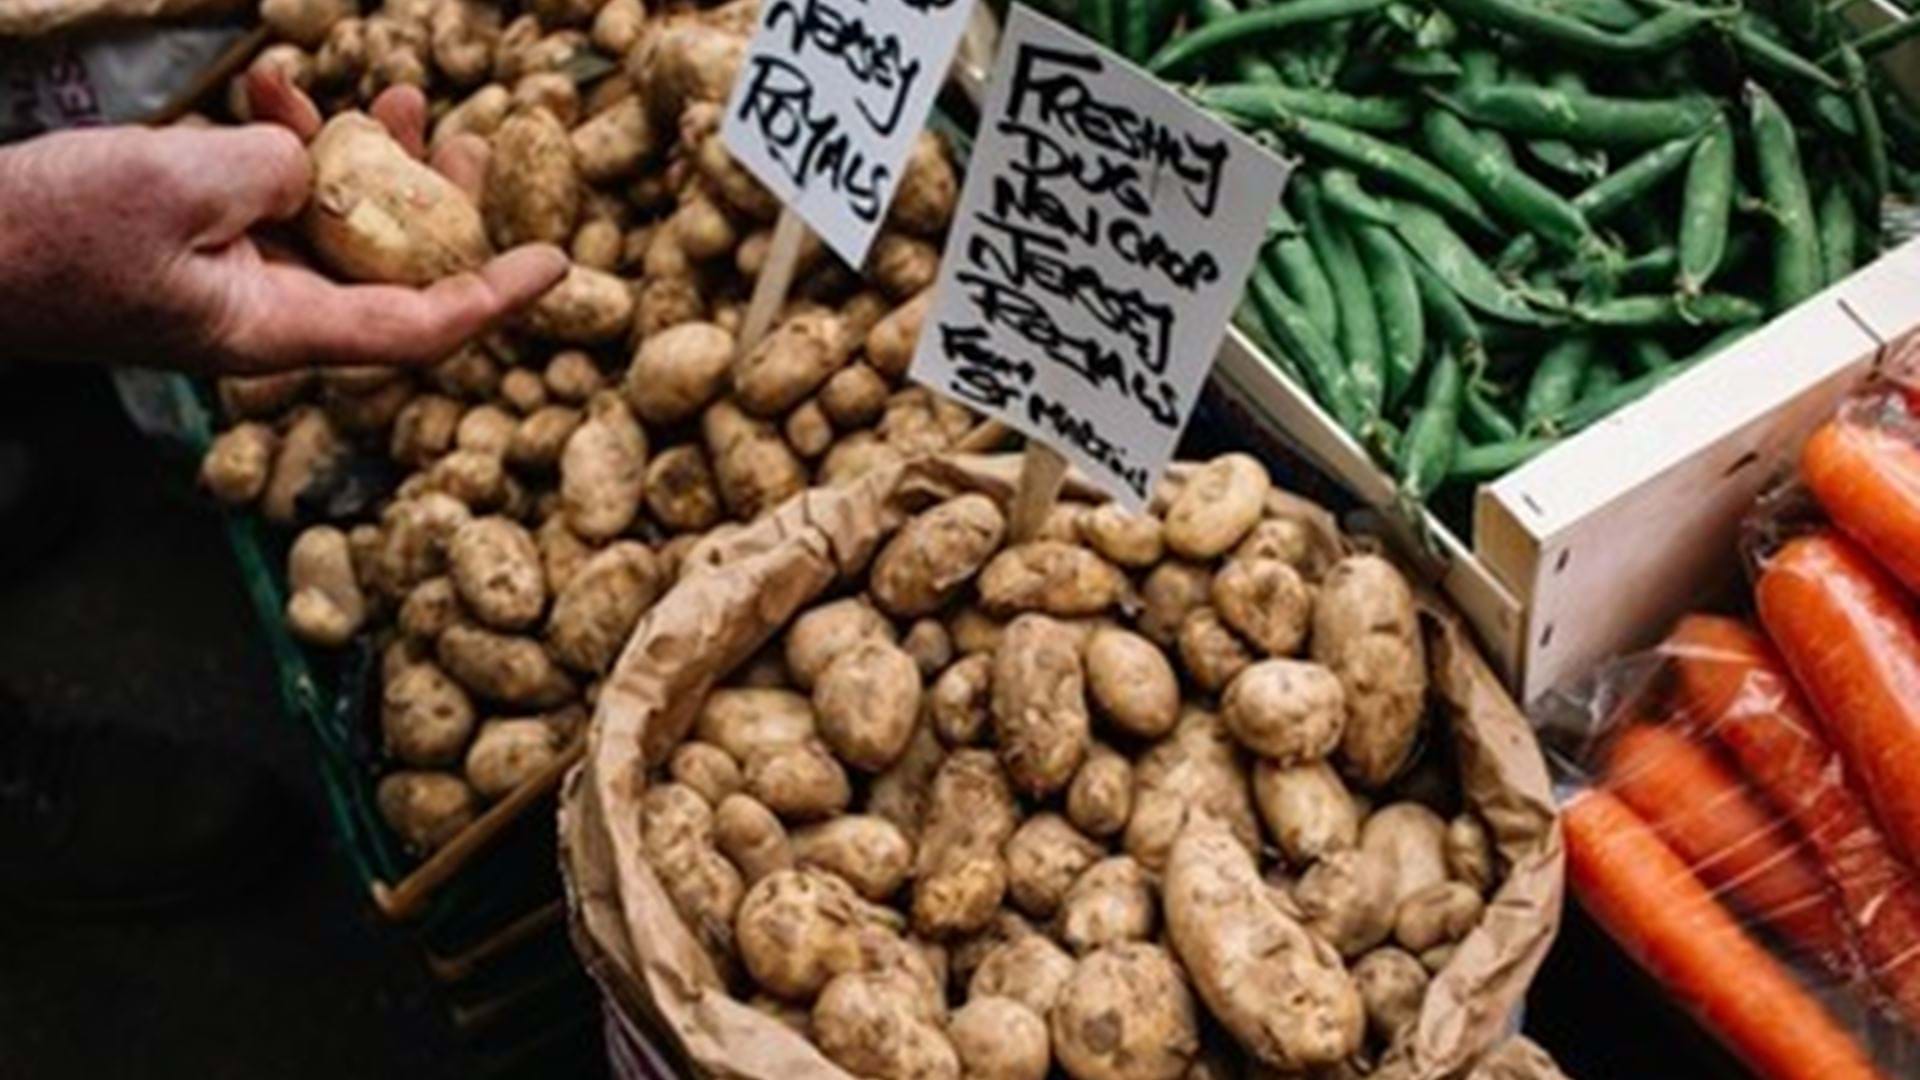 jersey-royal-potatoes-market-selling-channel-island